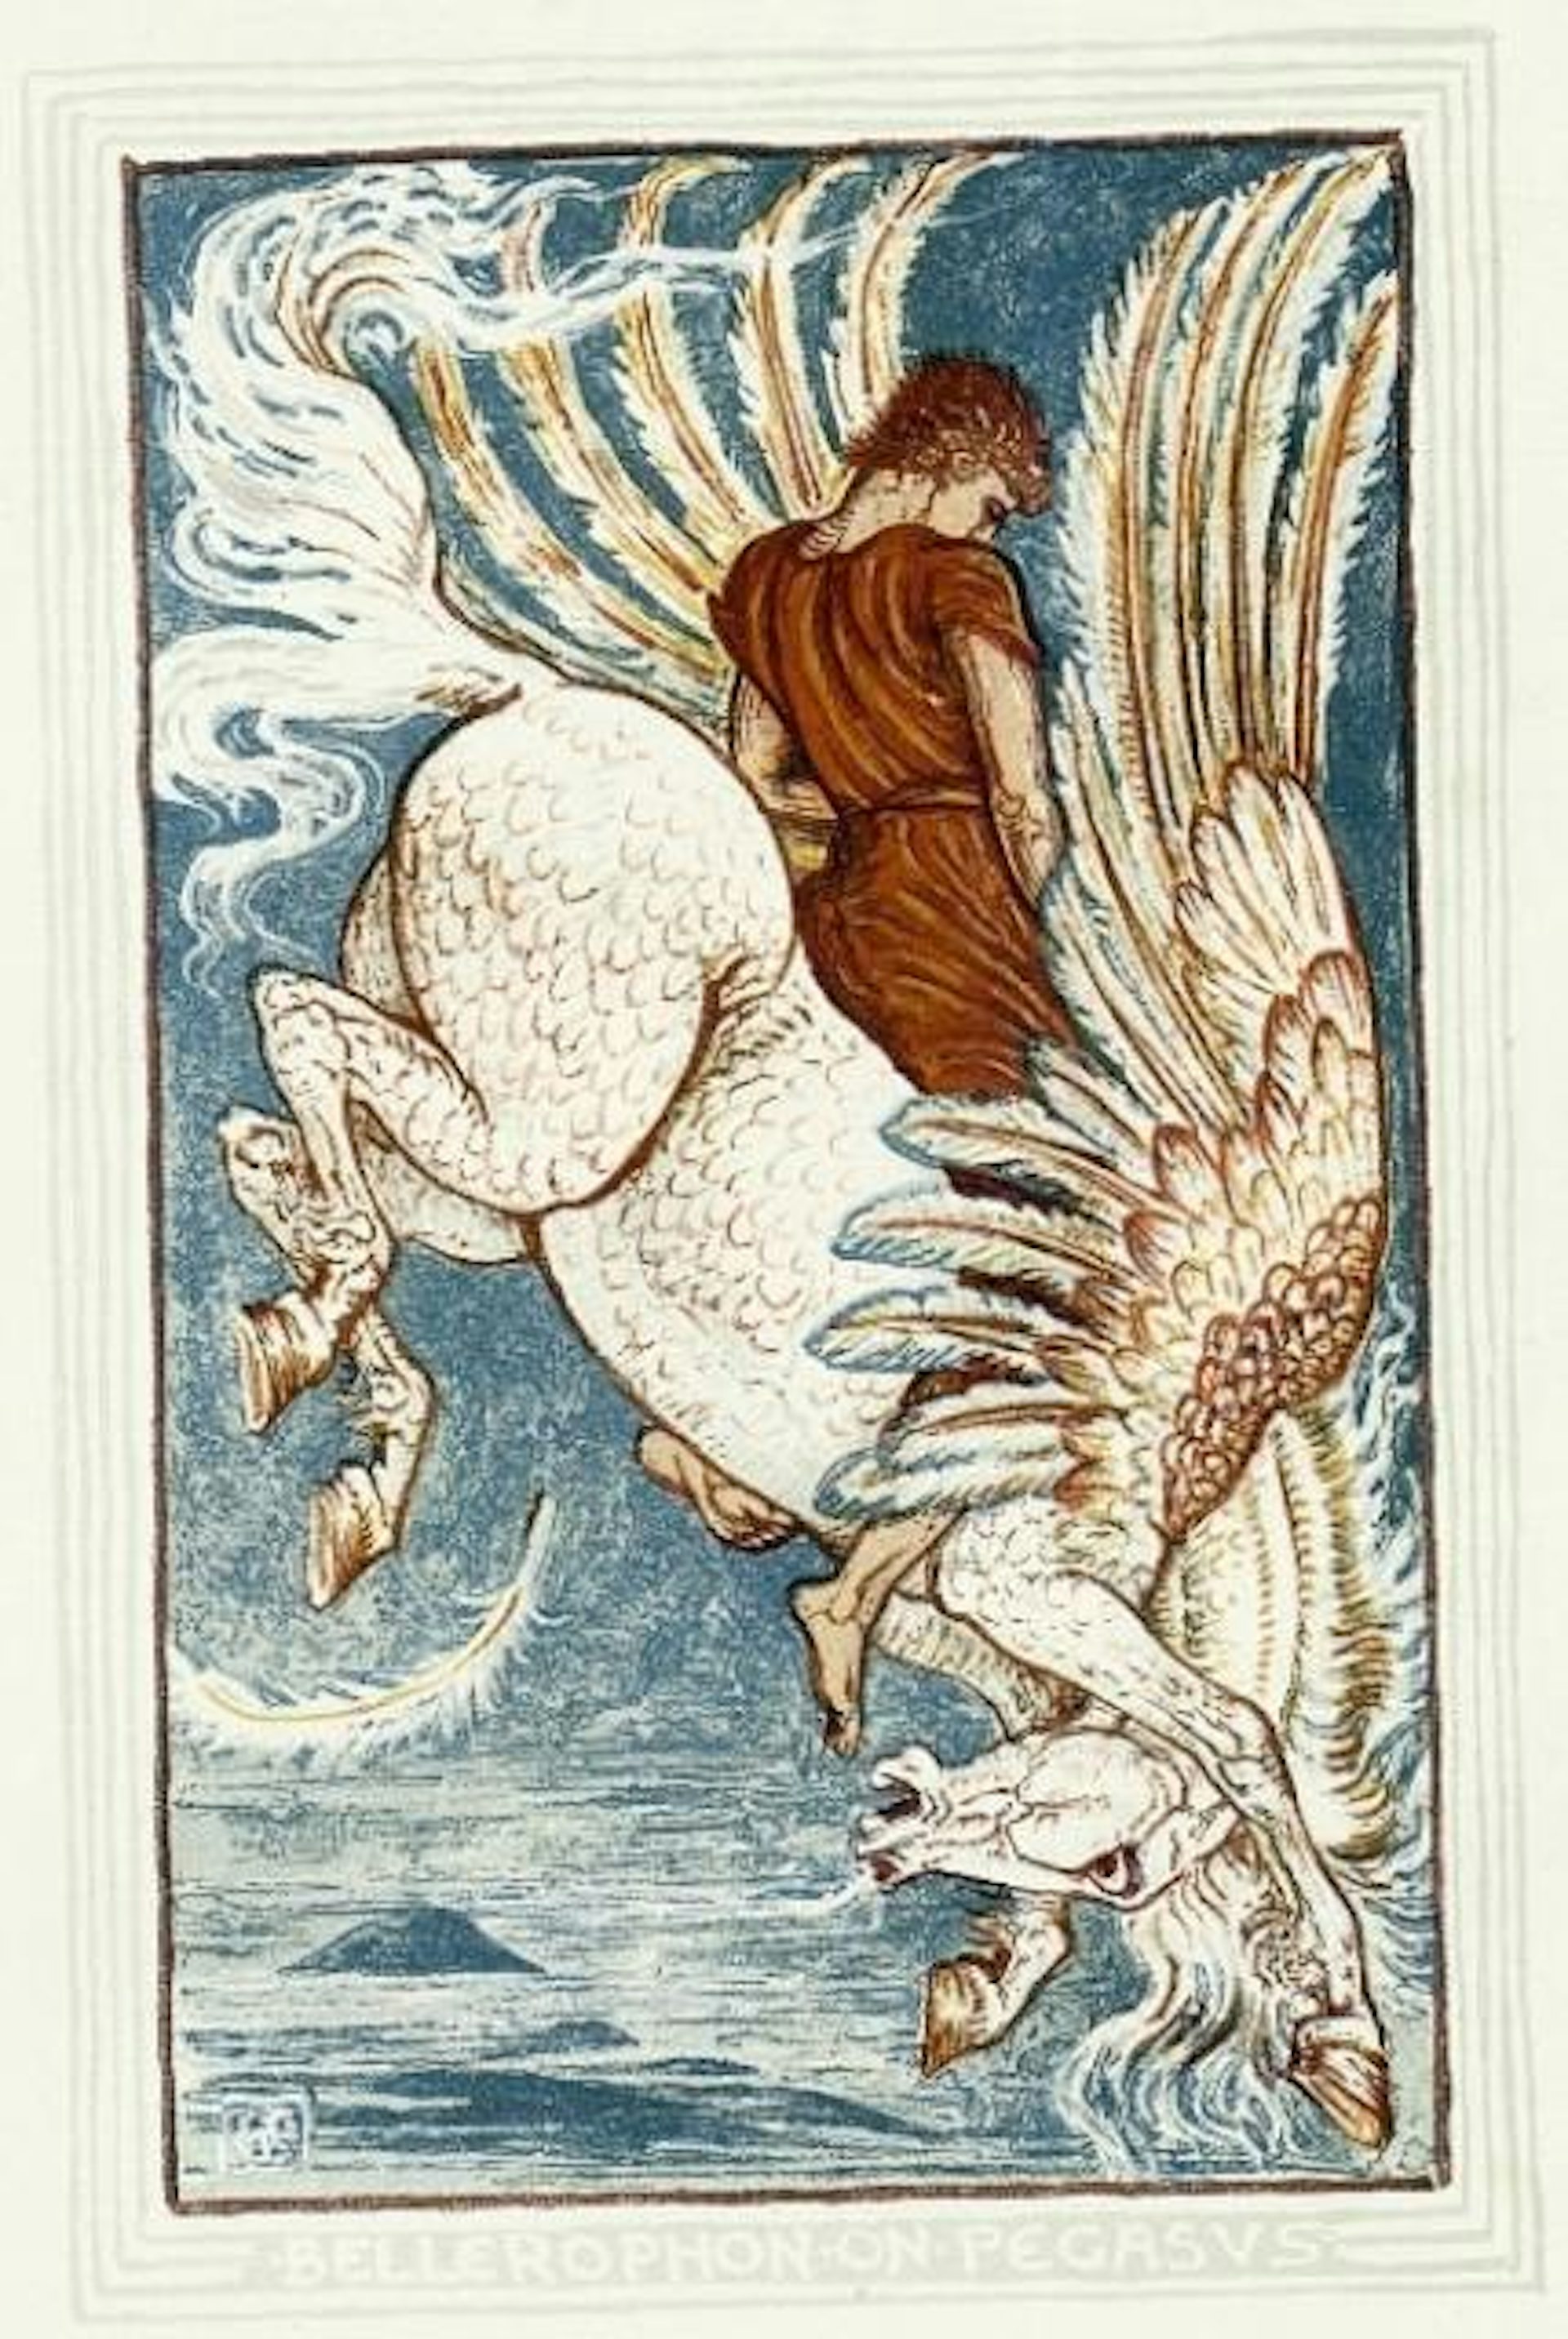 Drawing of Bellerophon on Pegasus-crane